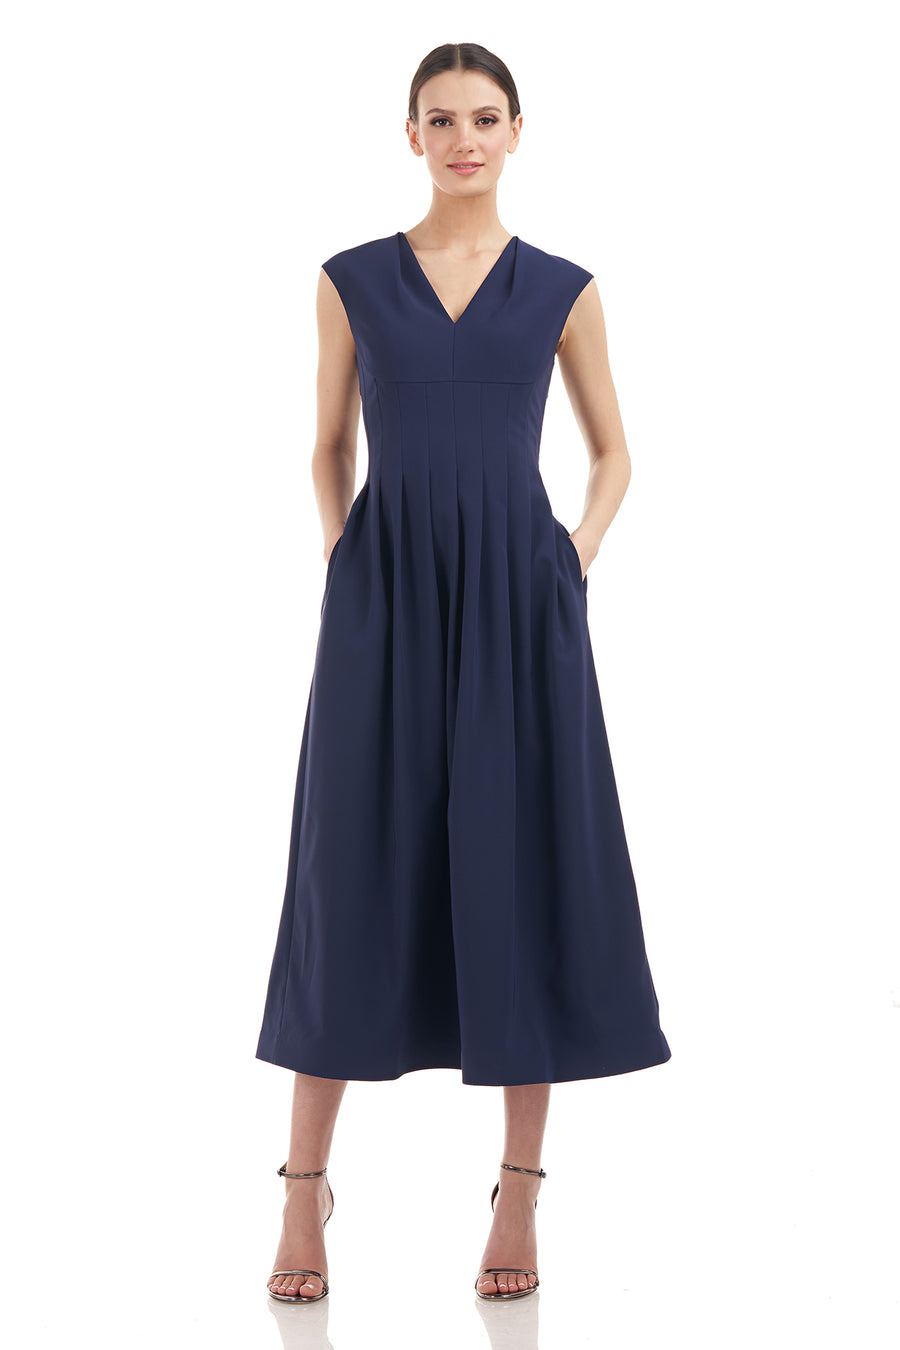 Simone T-Length Dress